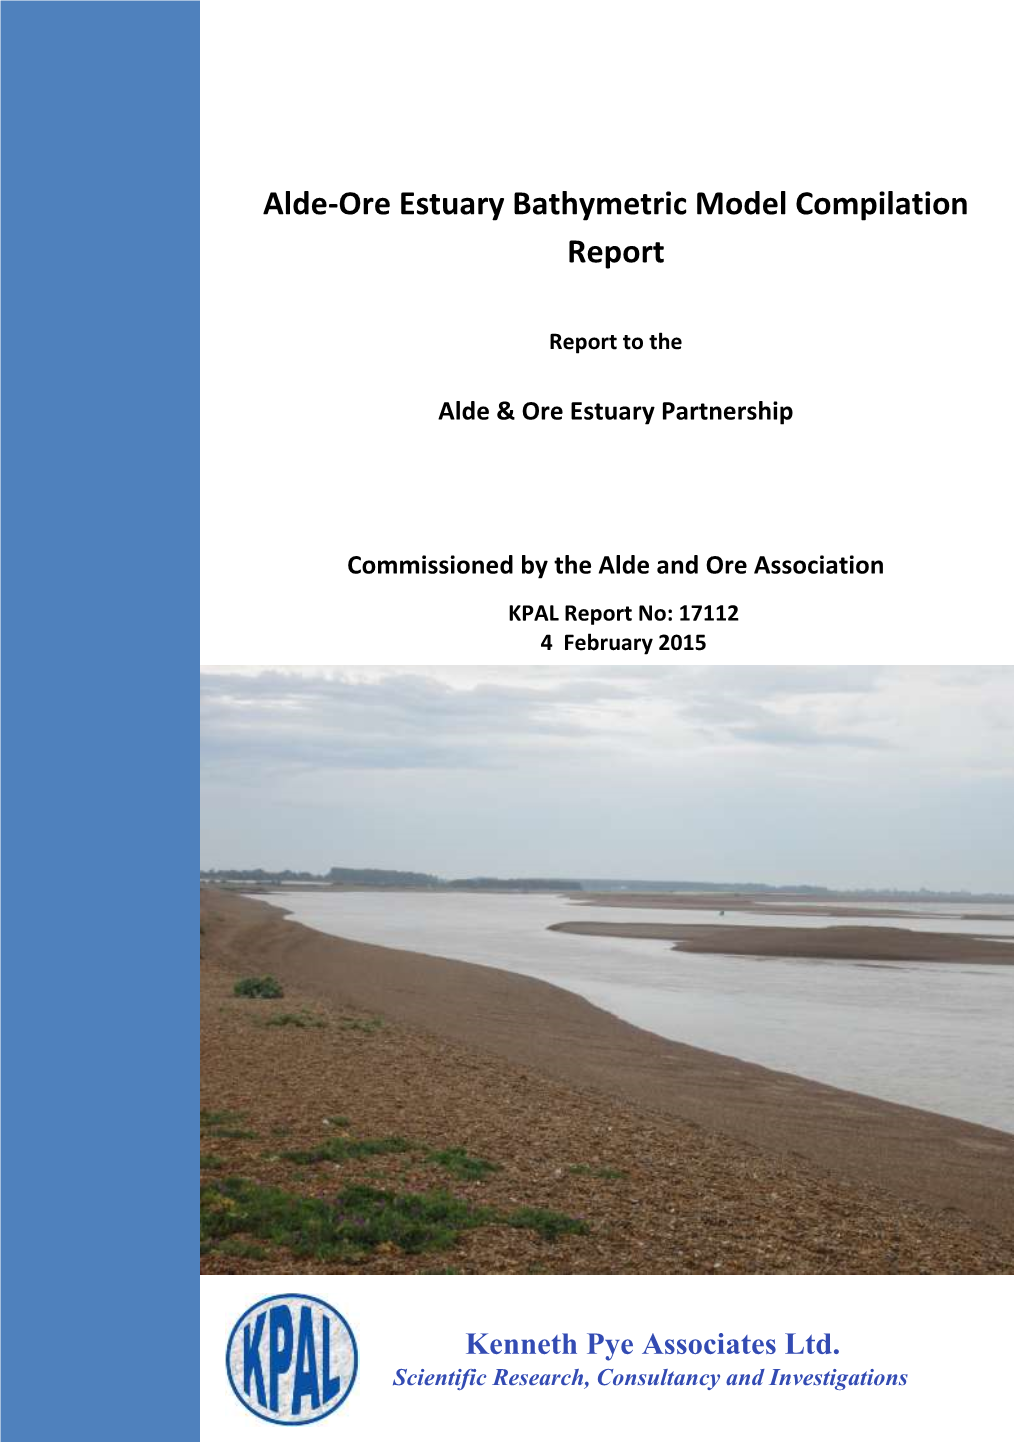 Alde-Ore Estuary Bathymetric Model Compilation Report